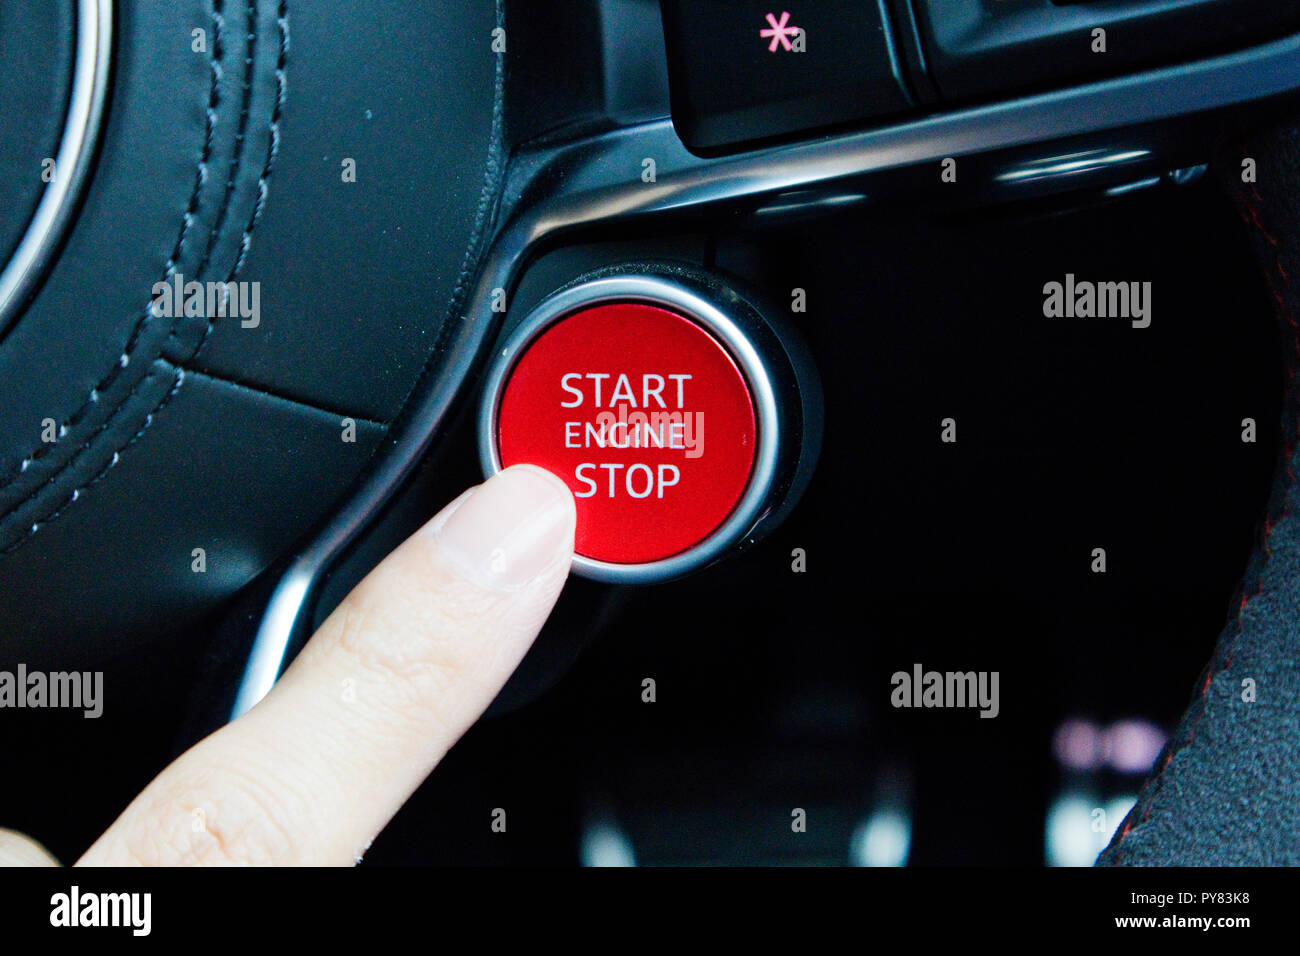 Hong Kong, China Jan 4, 2018 : Audi TTRS 2018 Start Stop Engine Jan 4 2018 in Hong Kong. Stock Photo